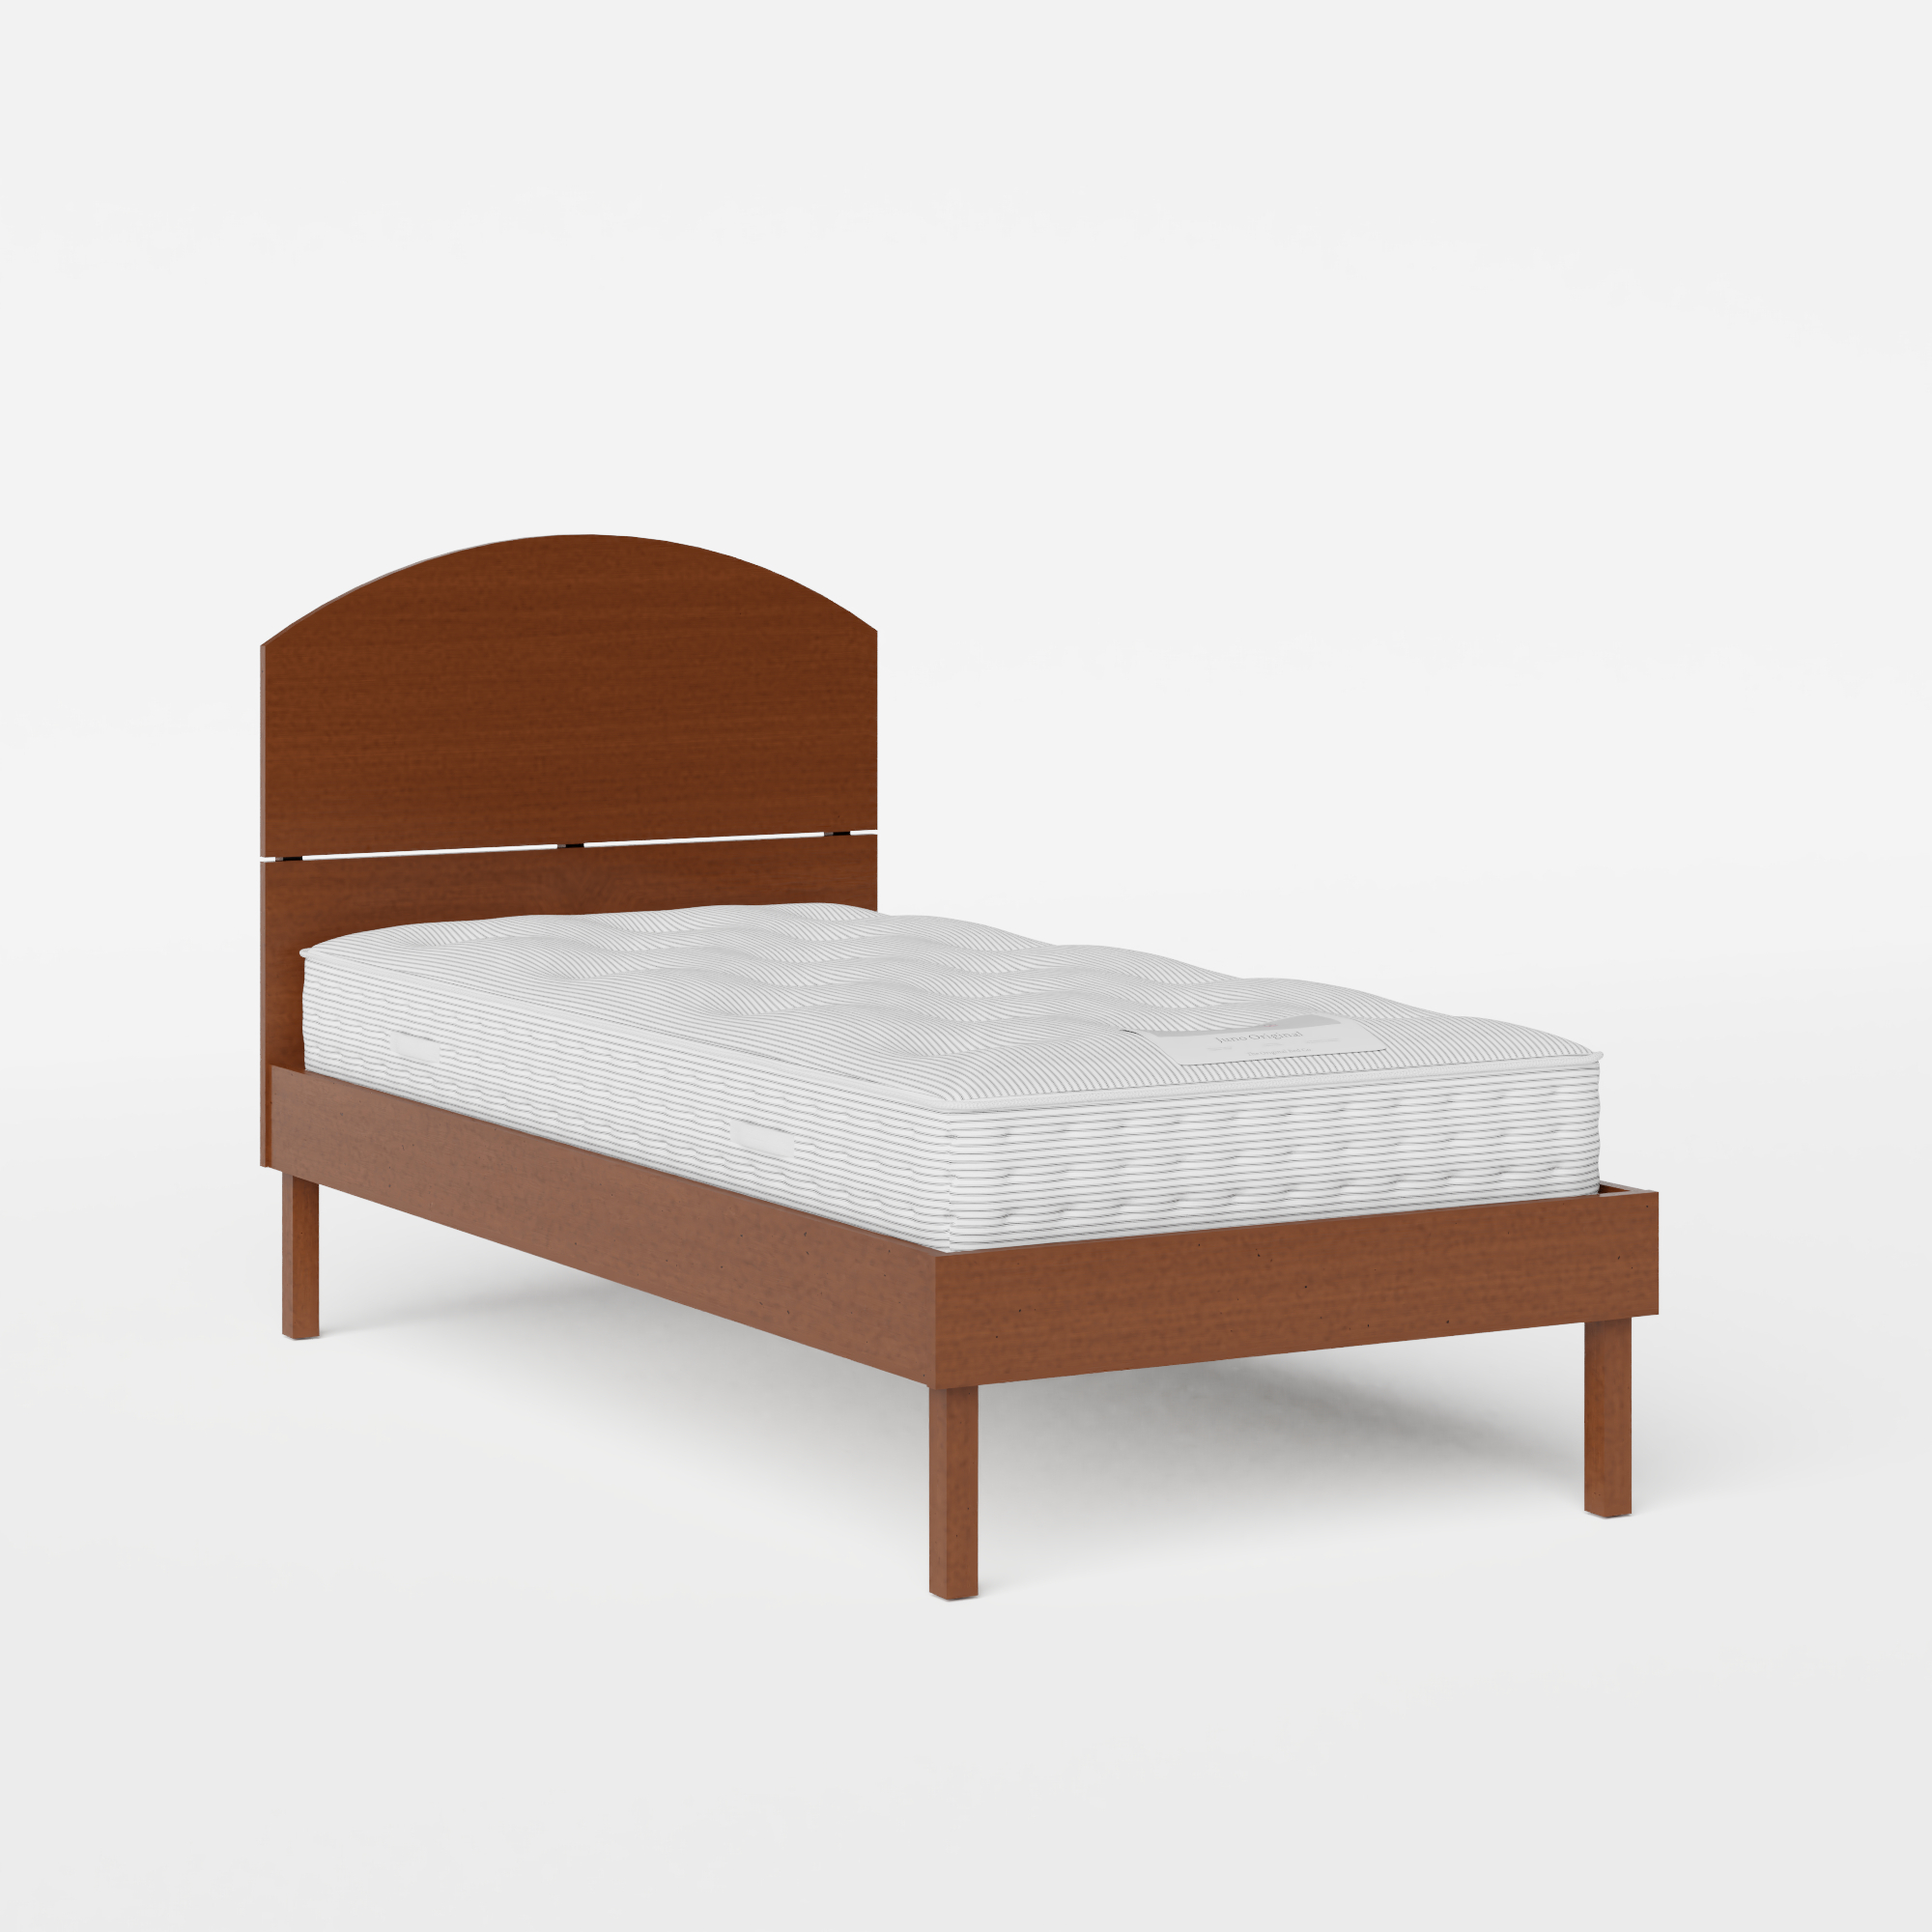 Okawa single wood bed in dark cherry with Juno mattress